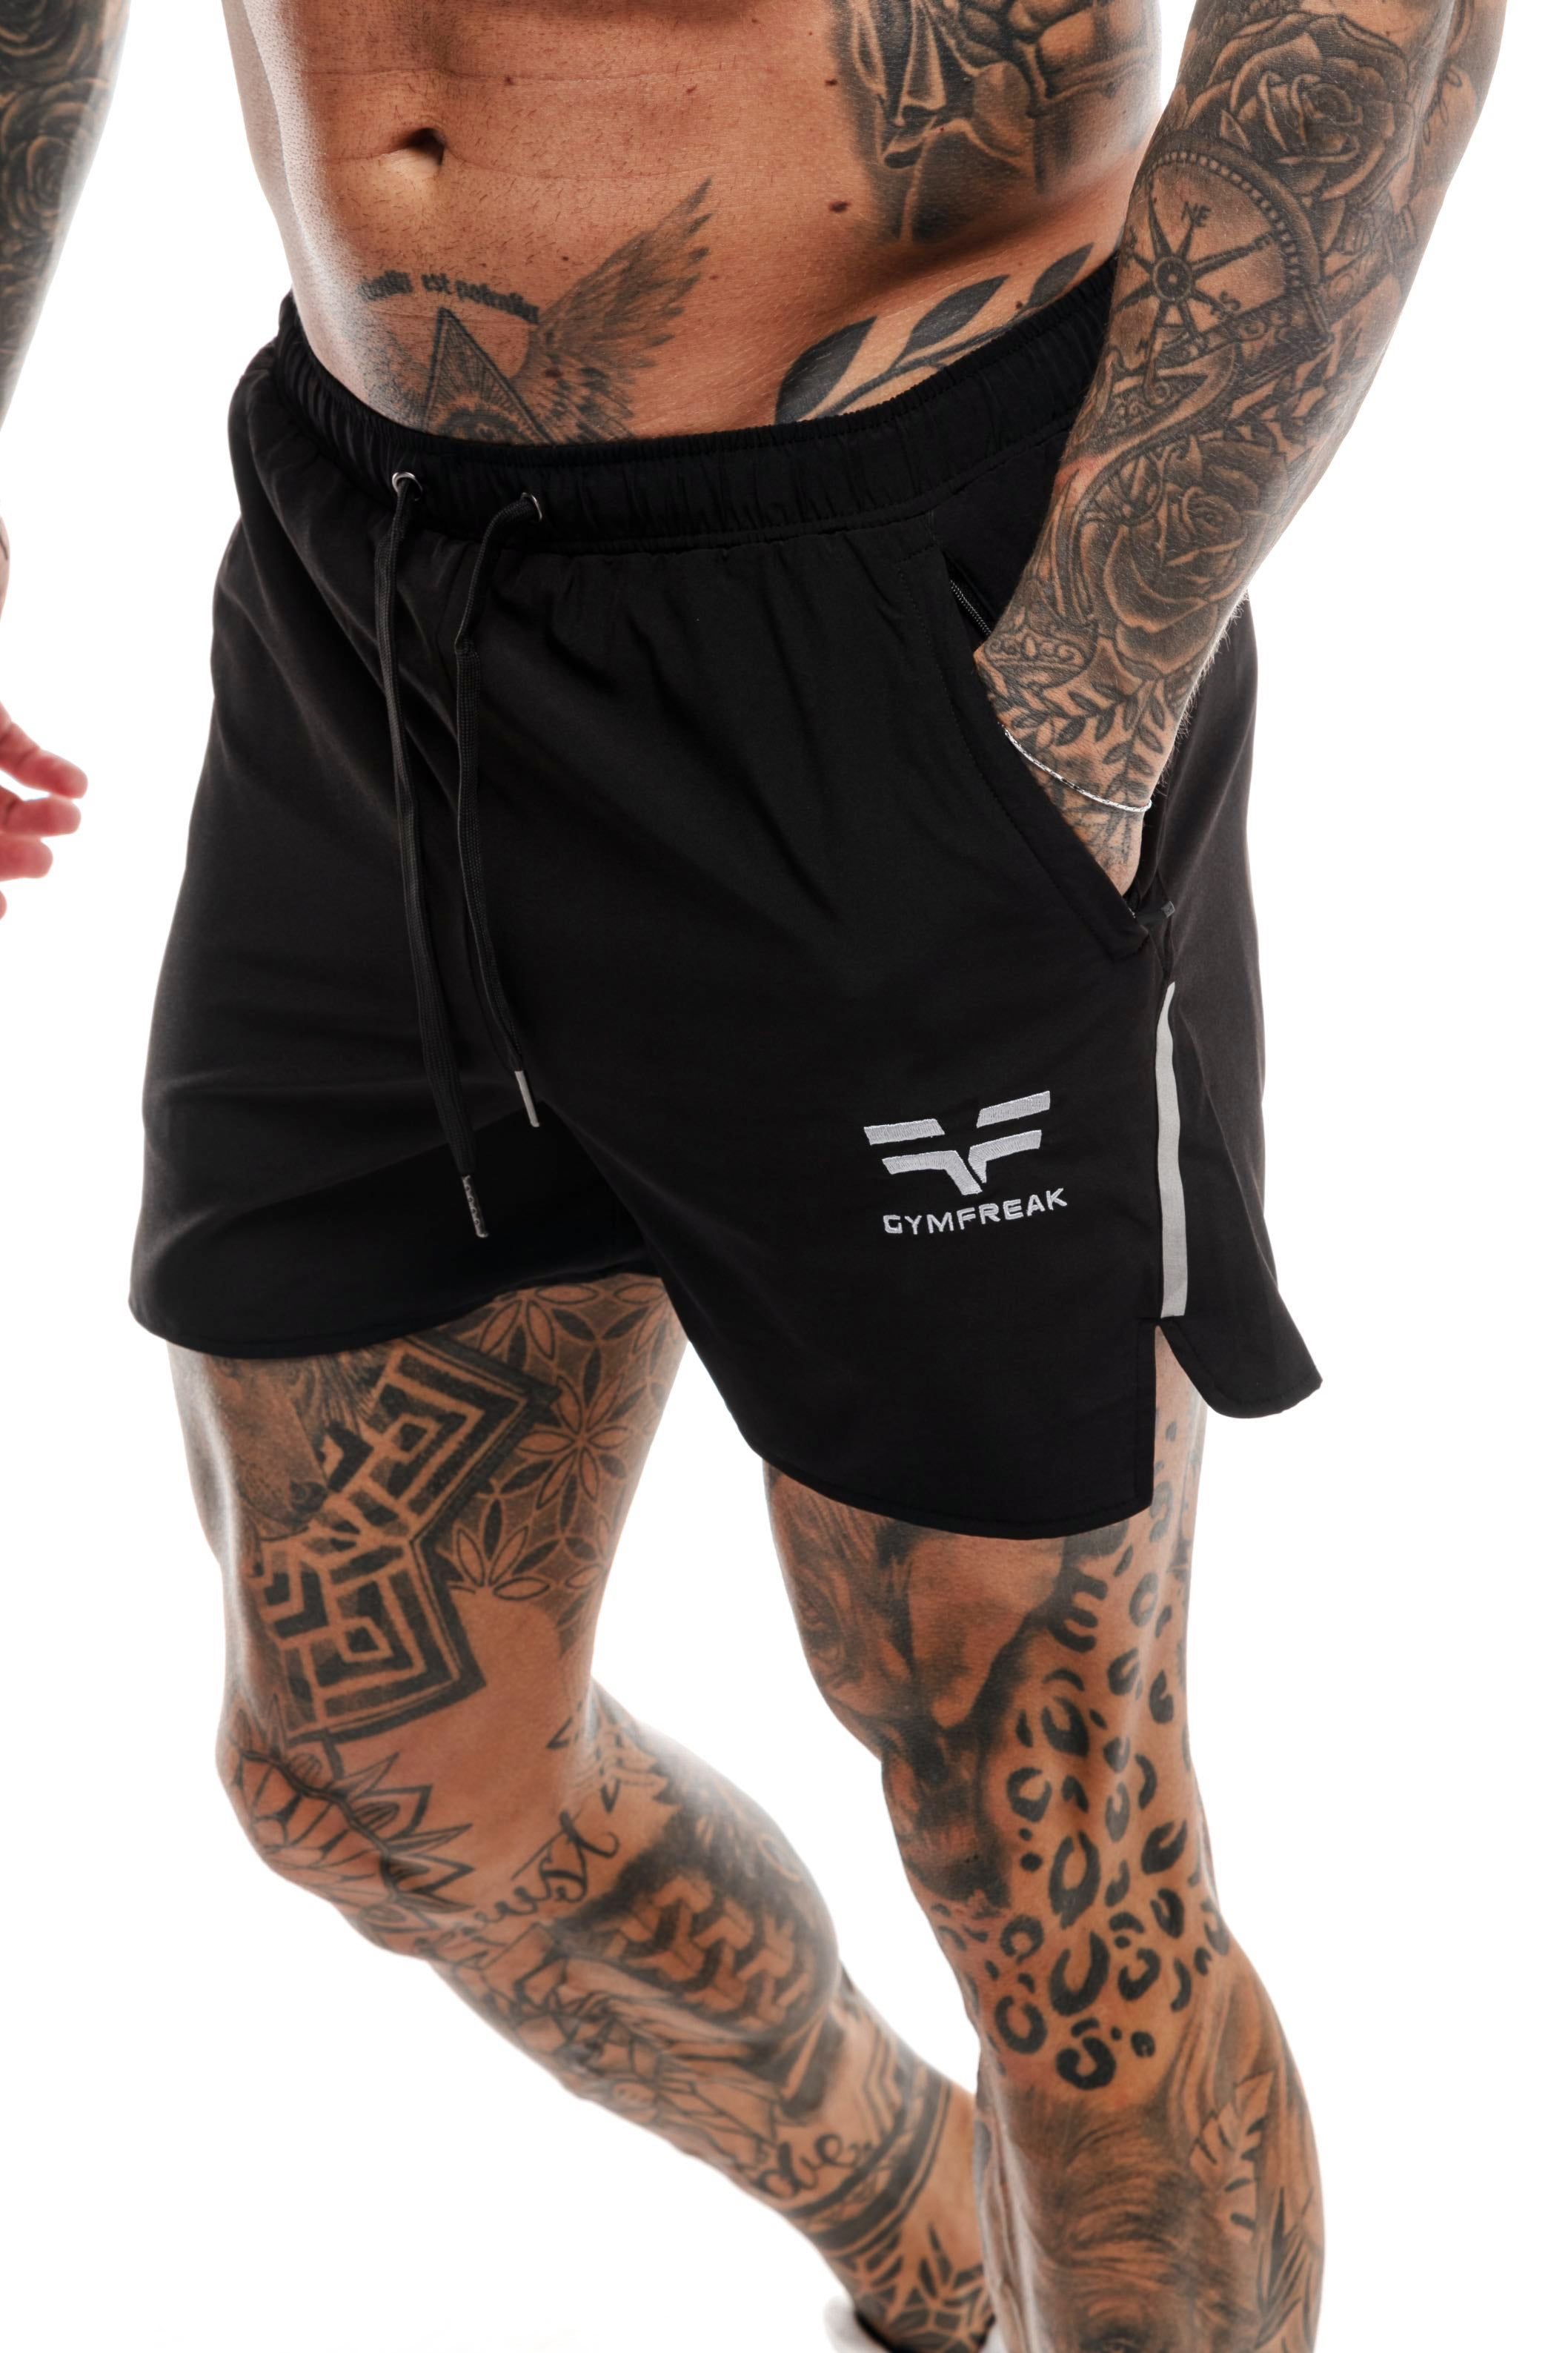 GymFreak Mens Fusion Shorts - Black - 3.5 inch